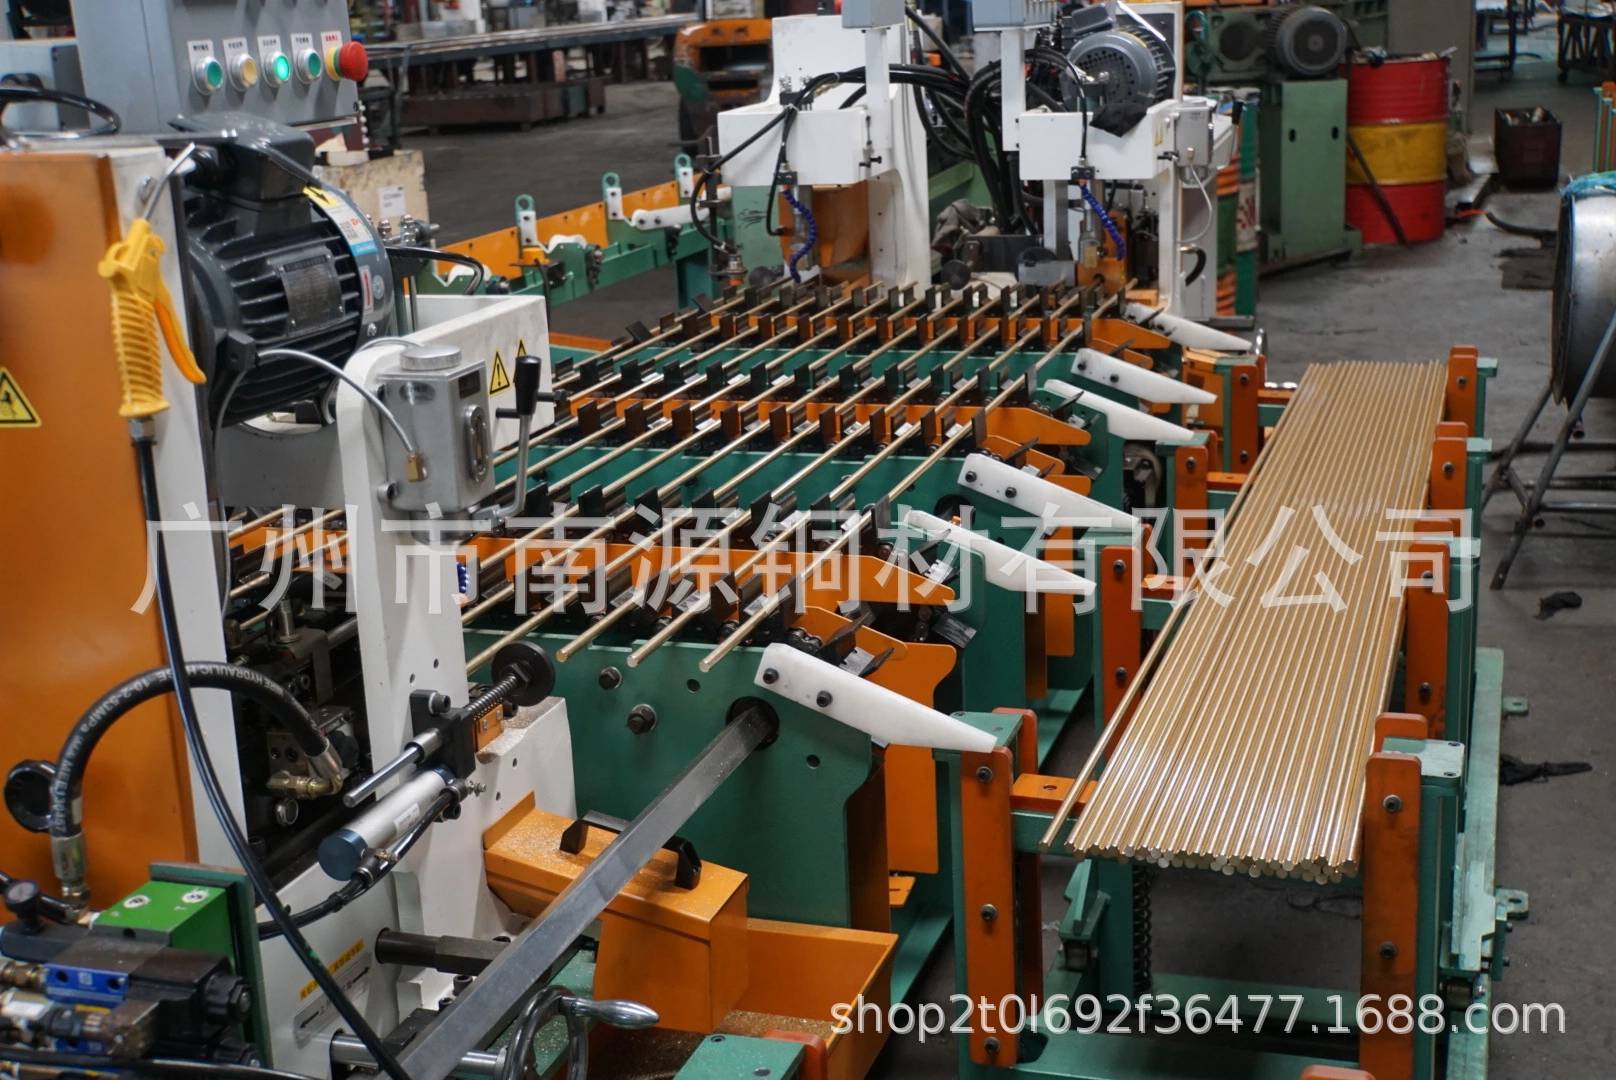   Guangzhou Nanyuan Copper Products Co., Ltd